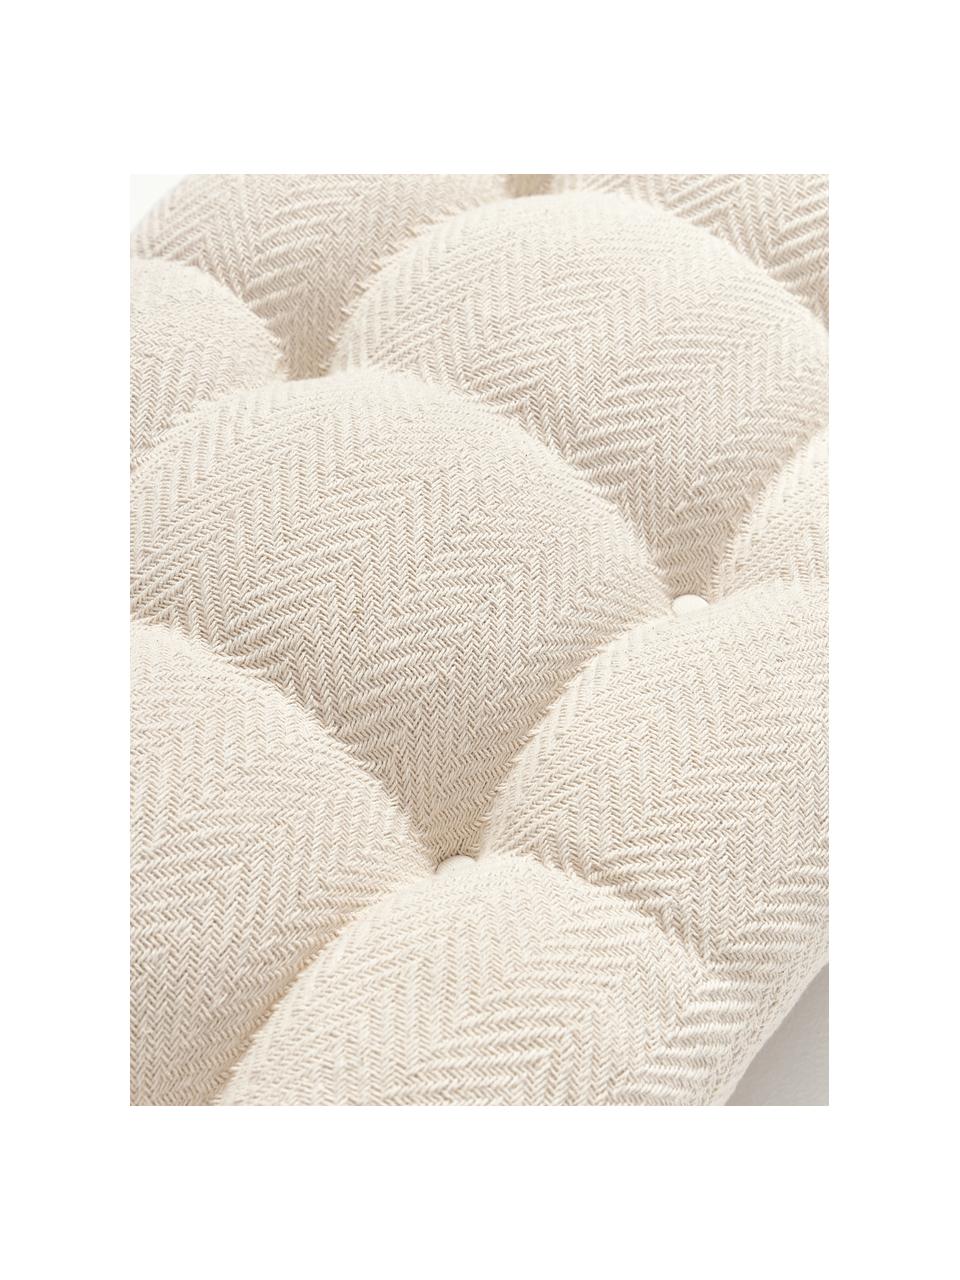 Cuscino per panca con nappe Rheya, Bianco latte, Larg. 48 x Lung. 120 cm